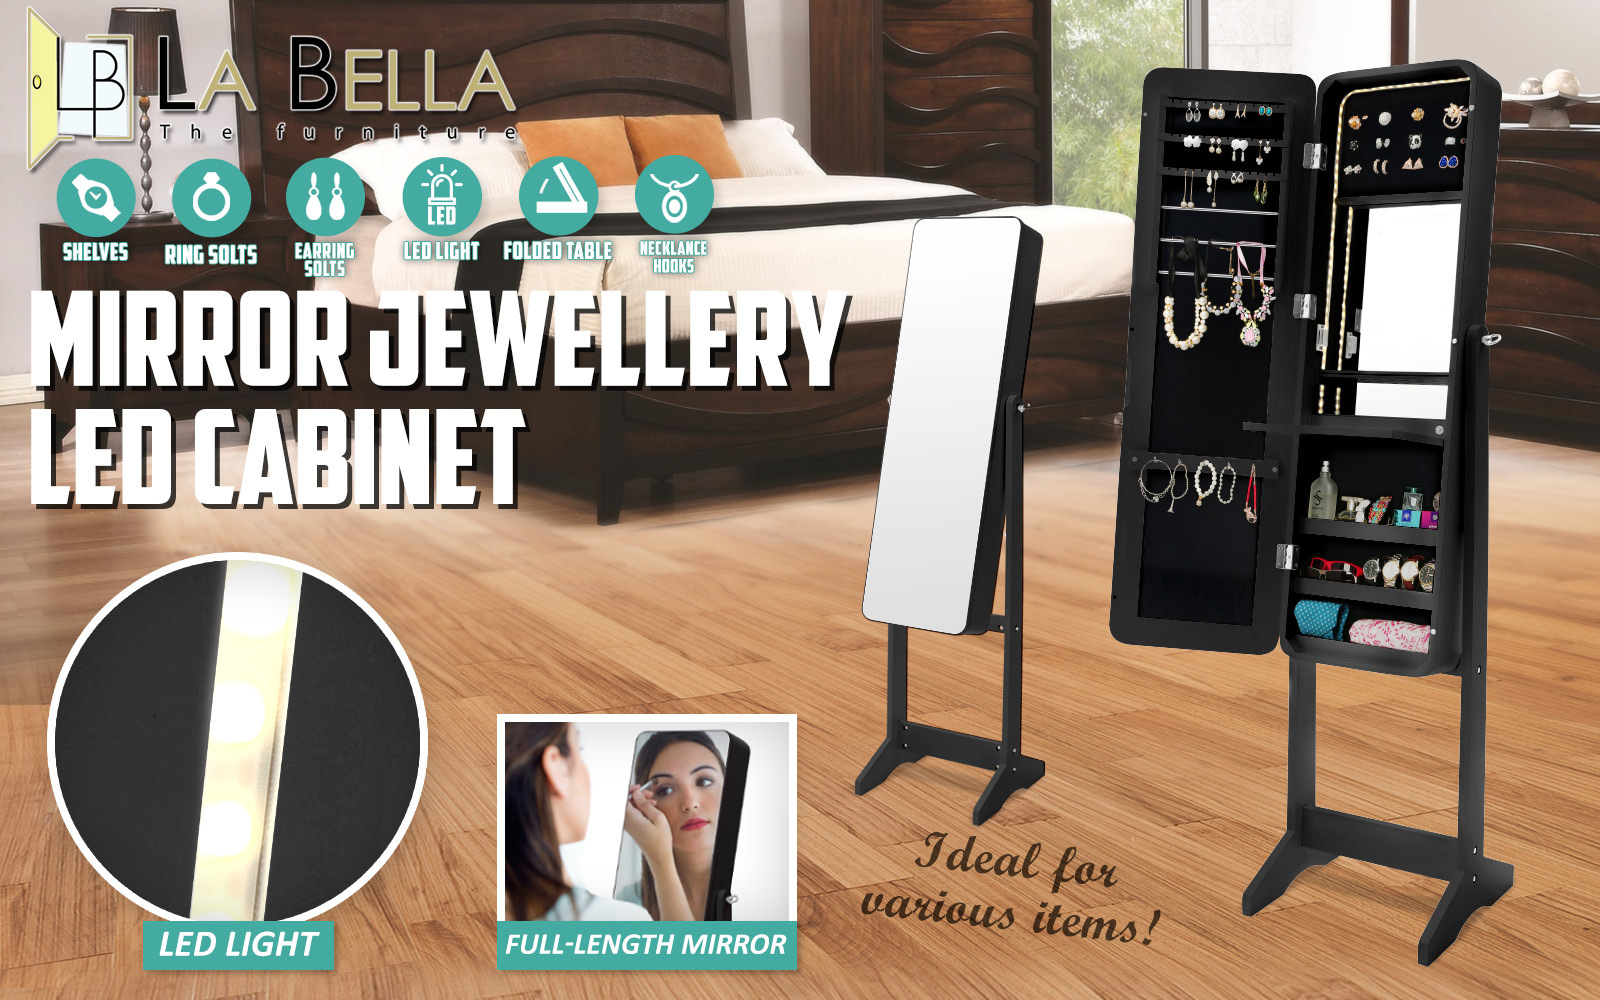 La Bella Mirror Jewellery Cabinet FLASHY 146cm Organiser LED